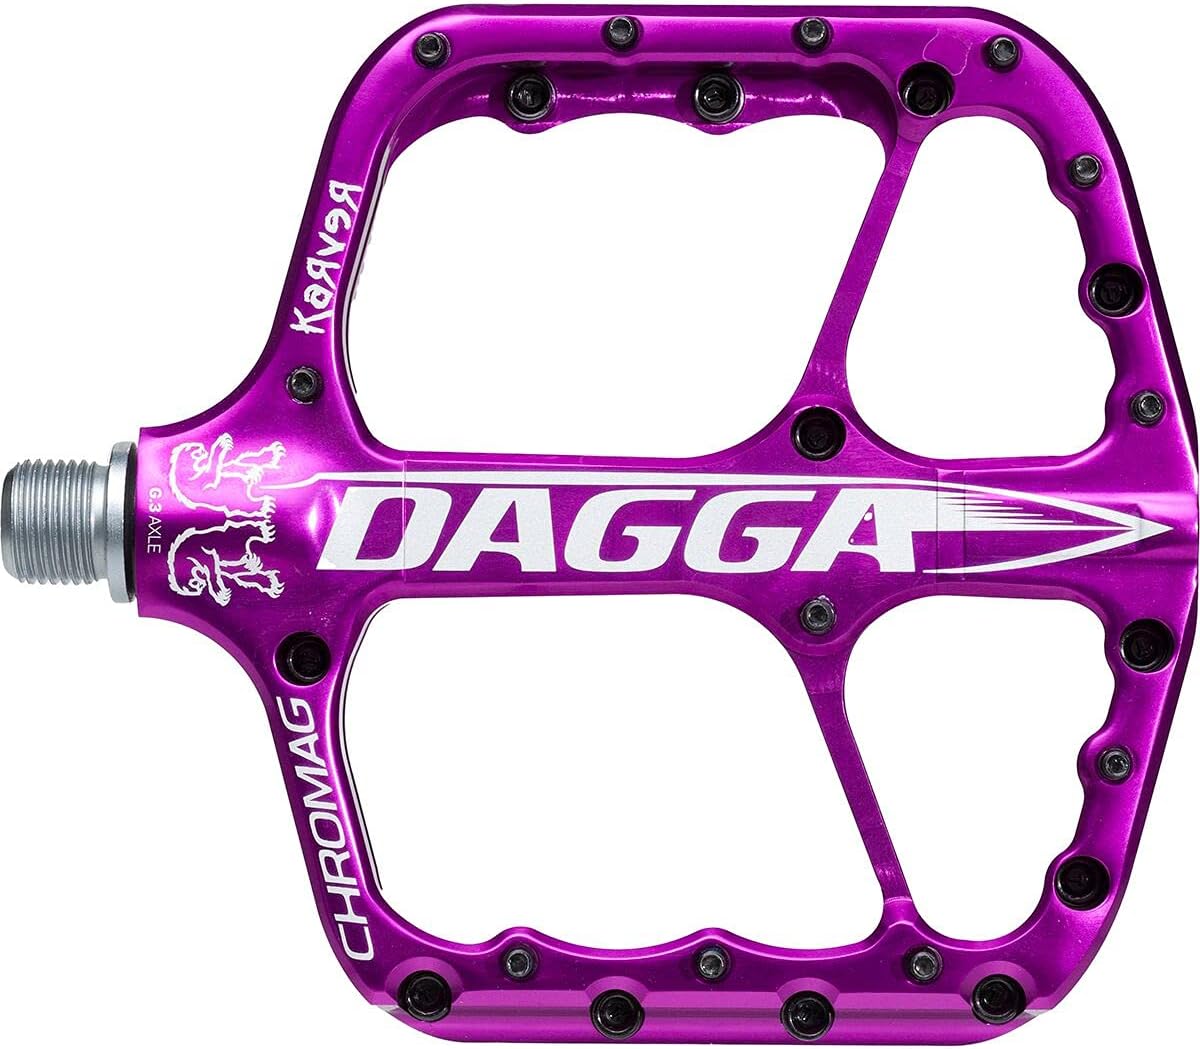 Chromag Dagga Platform MTB Pedals - Purple